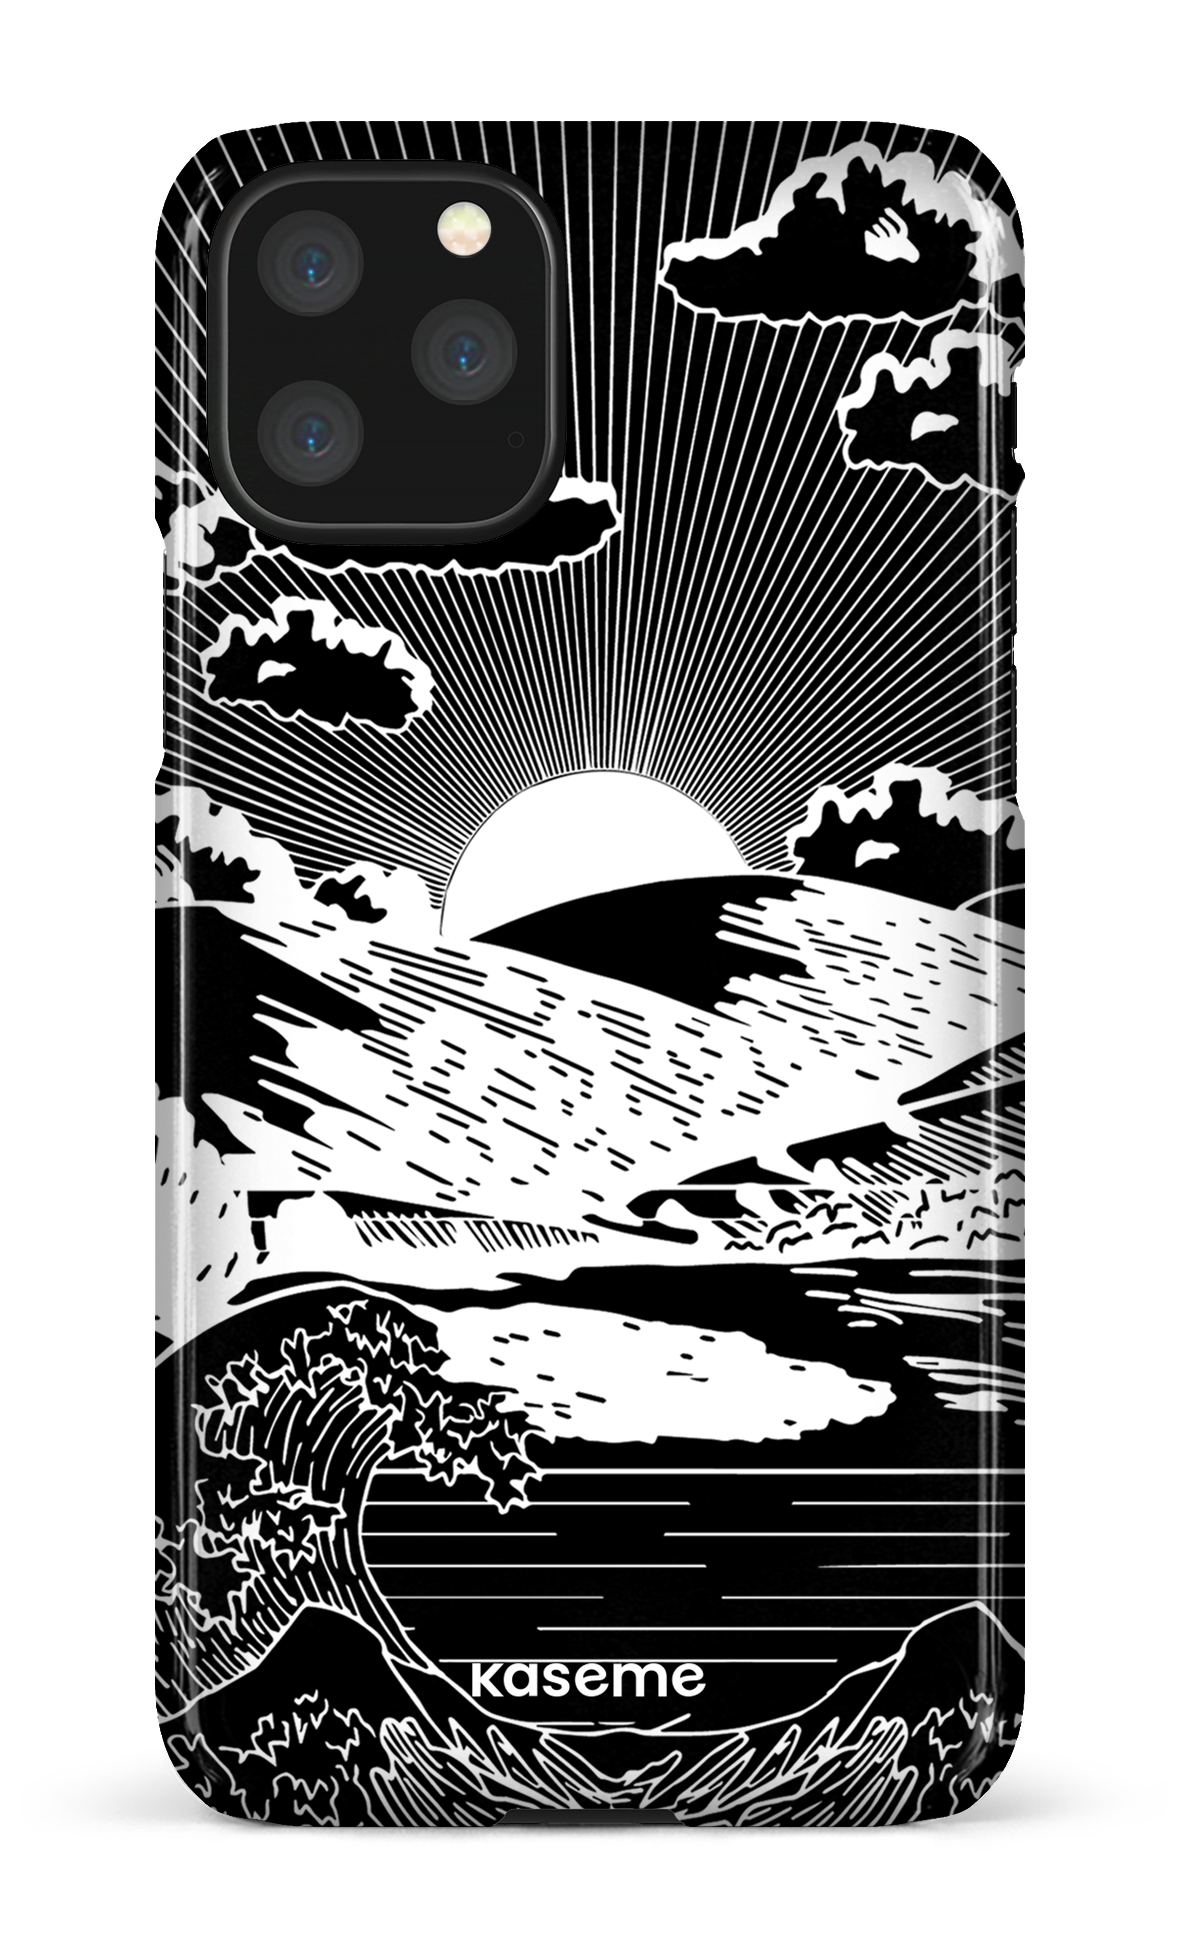 Sunbath black - iPhone 11 Pro